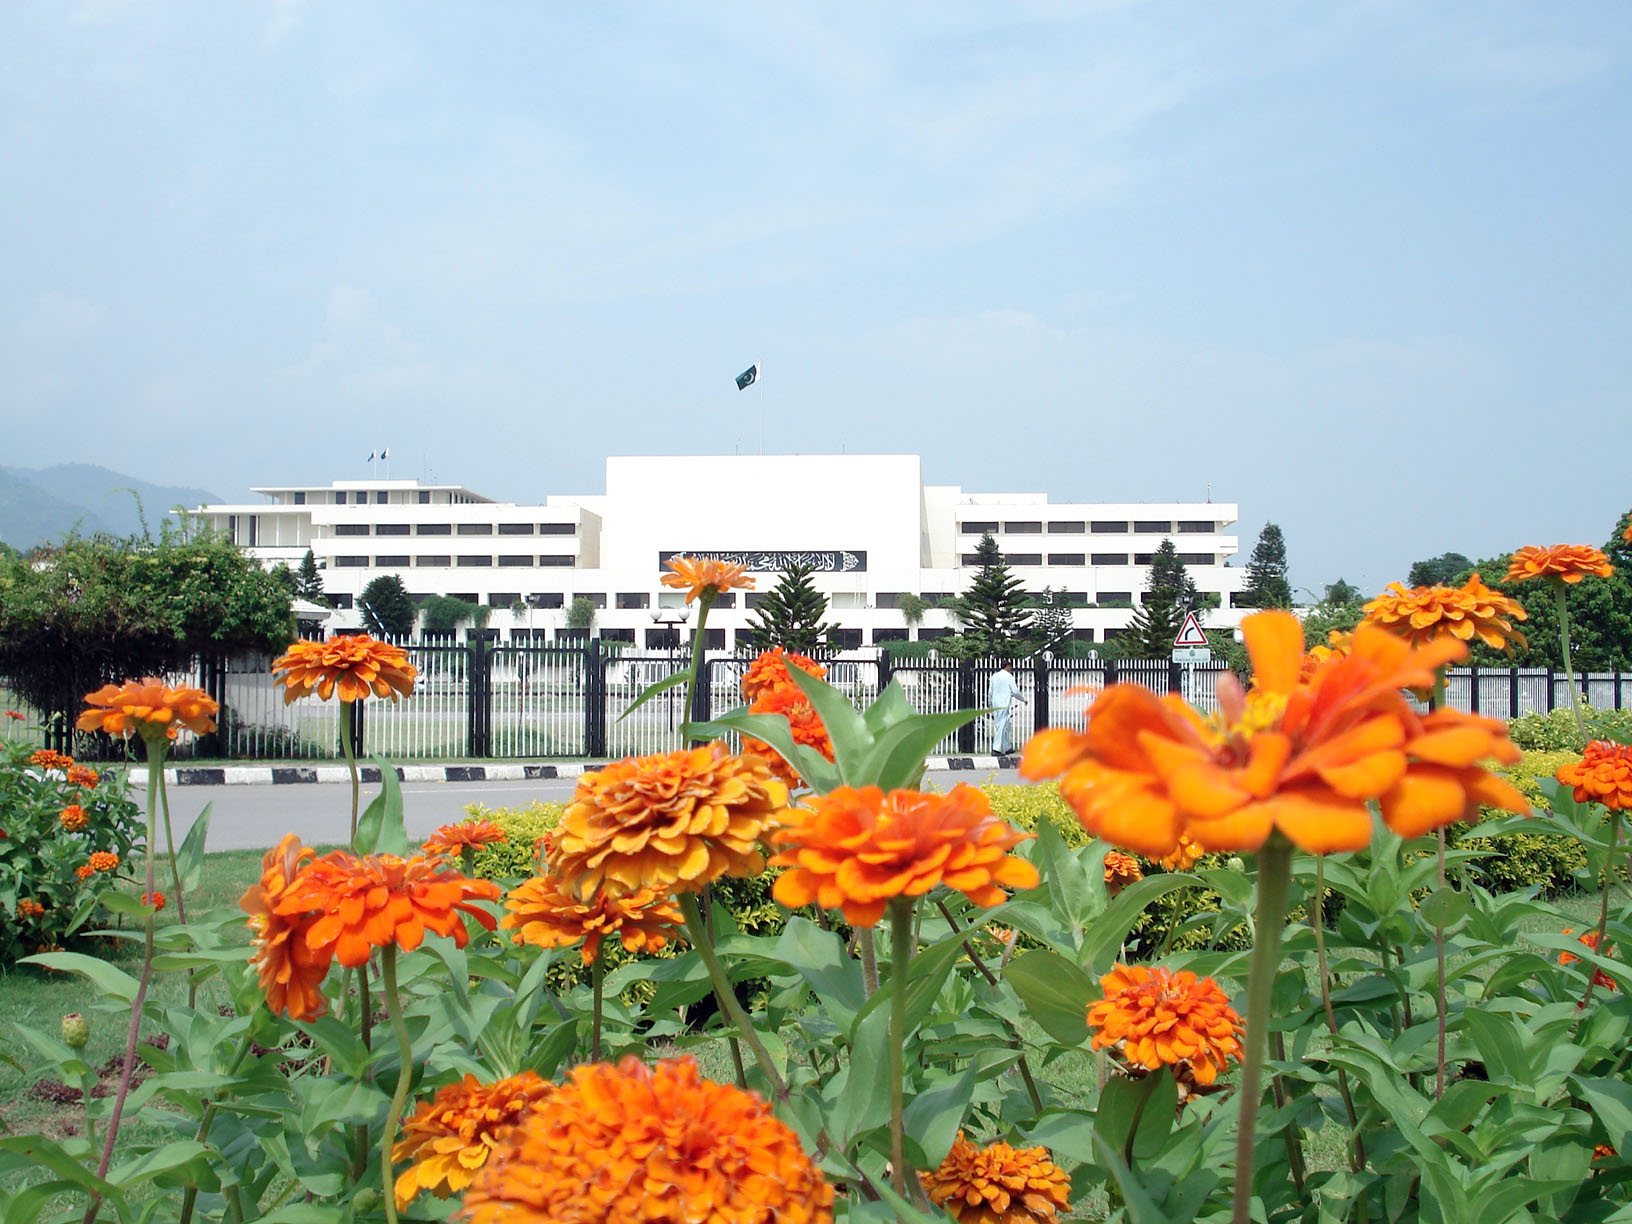 Parliament building in Islamabad, Pakistan